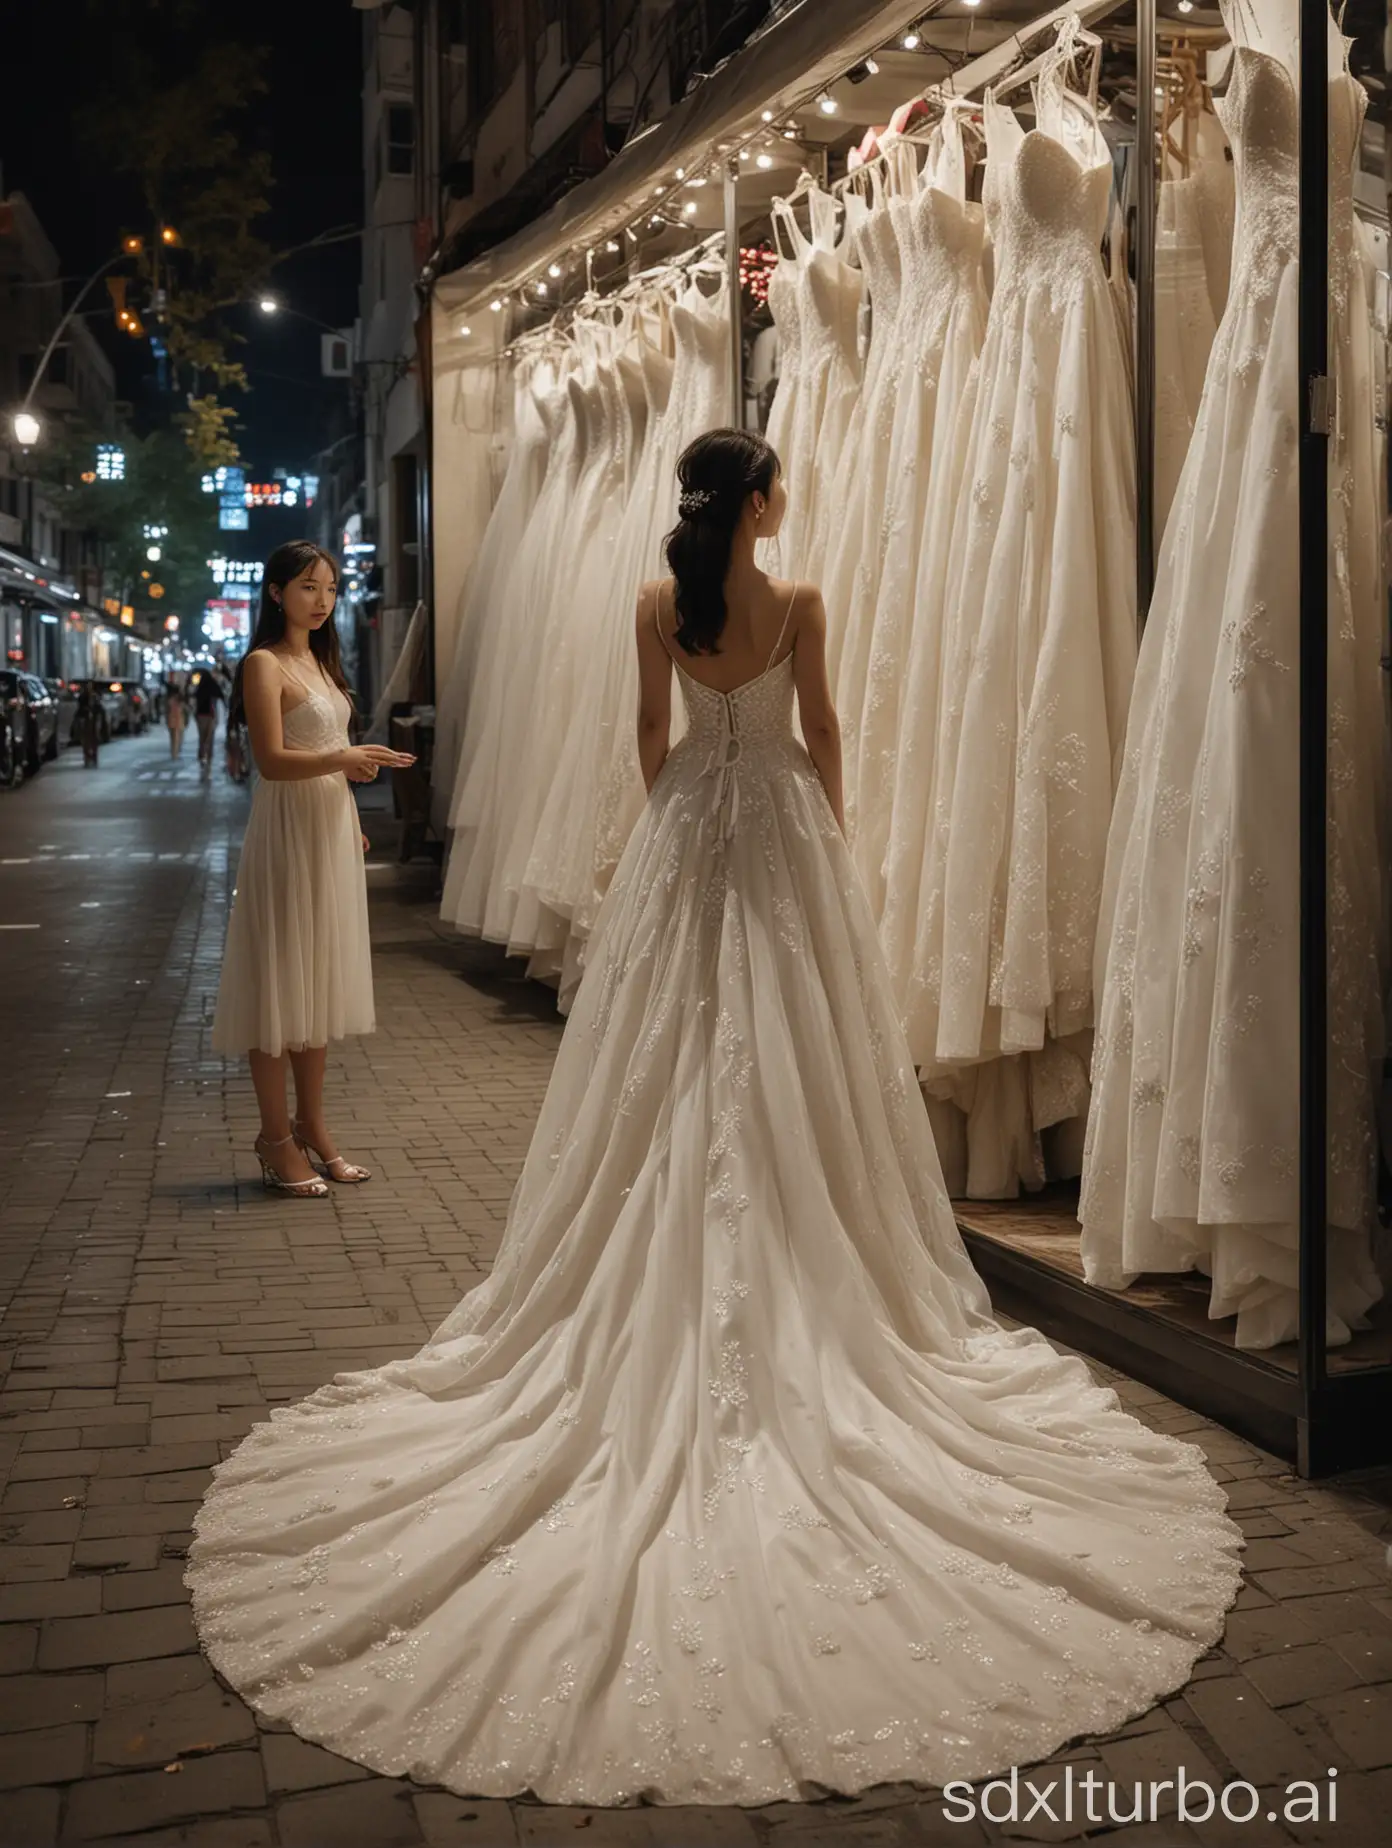 Chinese-Girl-Admiring-Wedding-Dress-in-City-Bridal-Shop